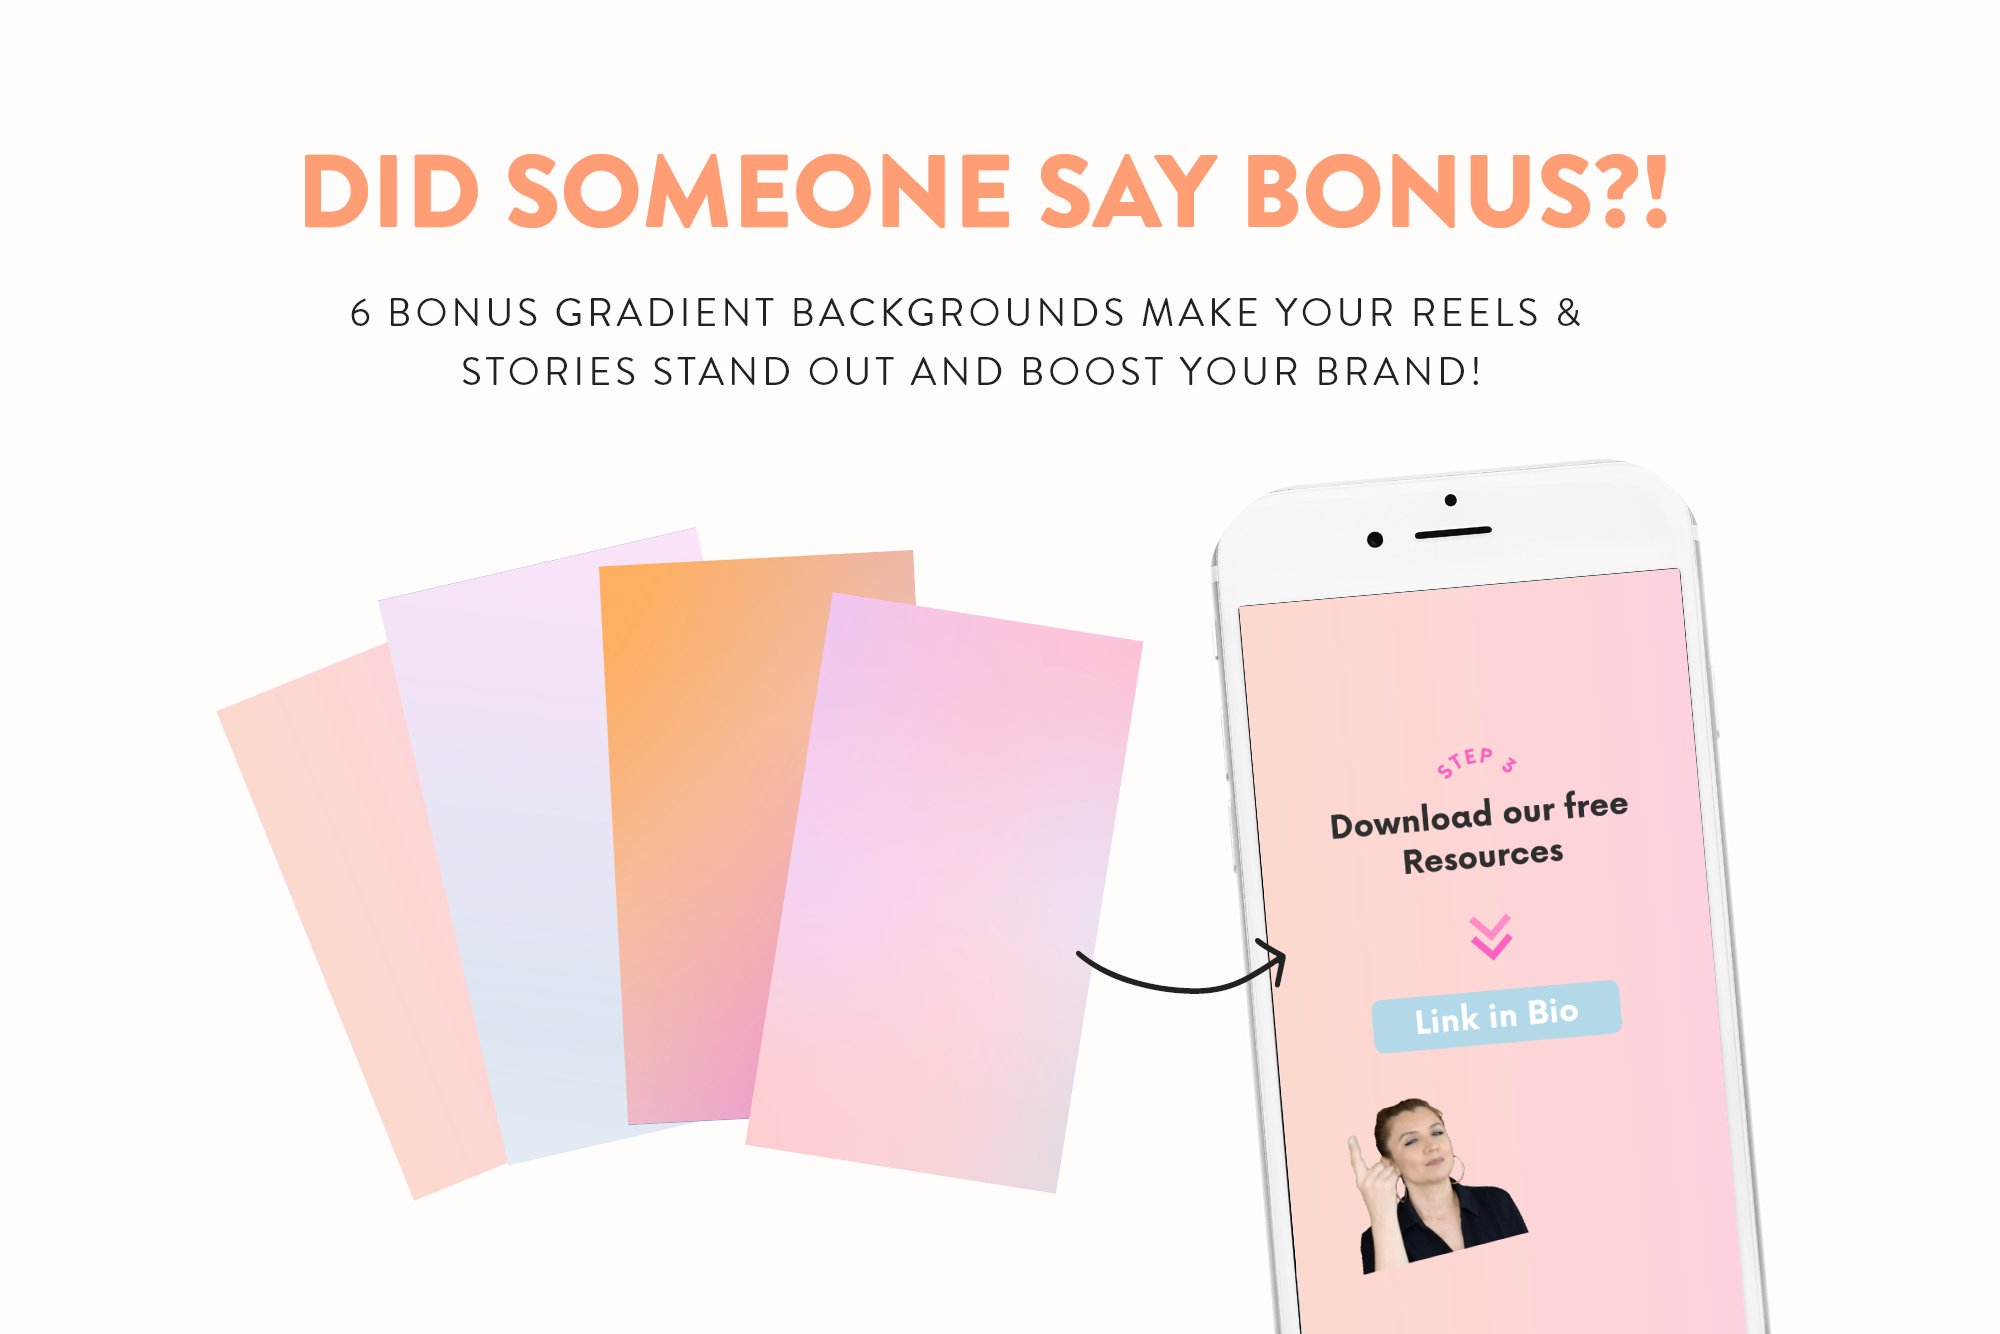 You'll get 6 bonus gradient backgrounds.